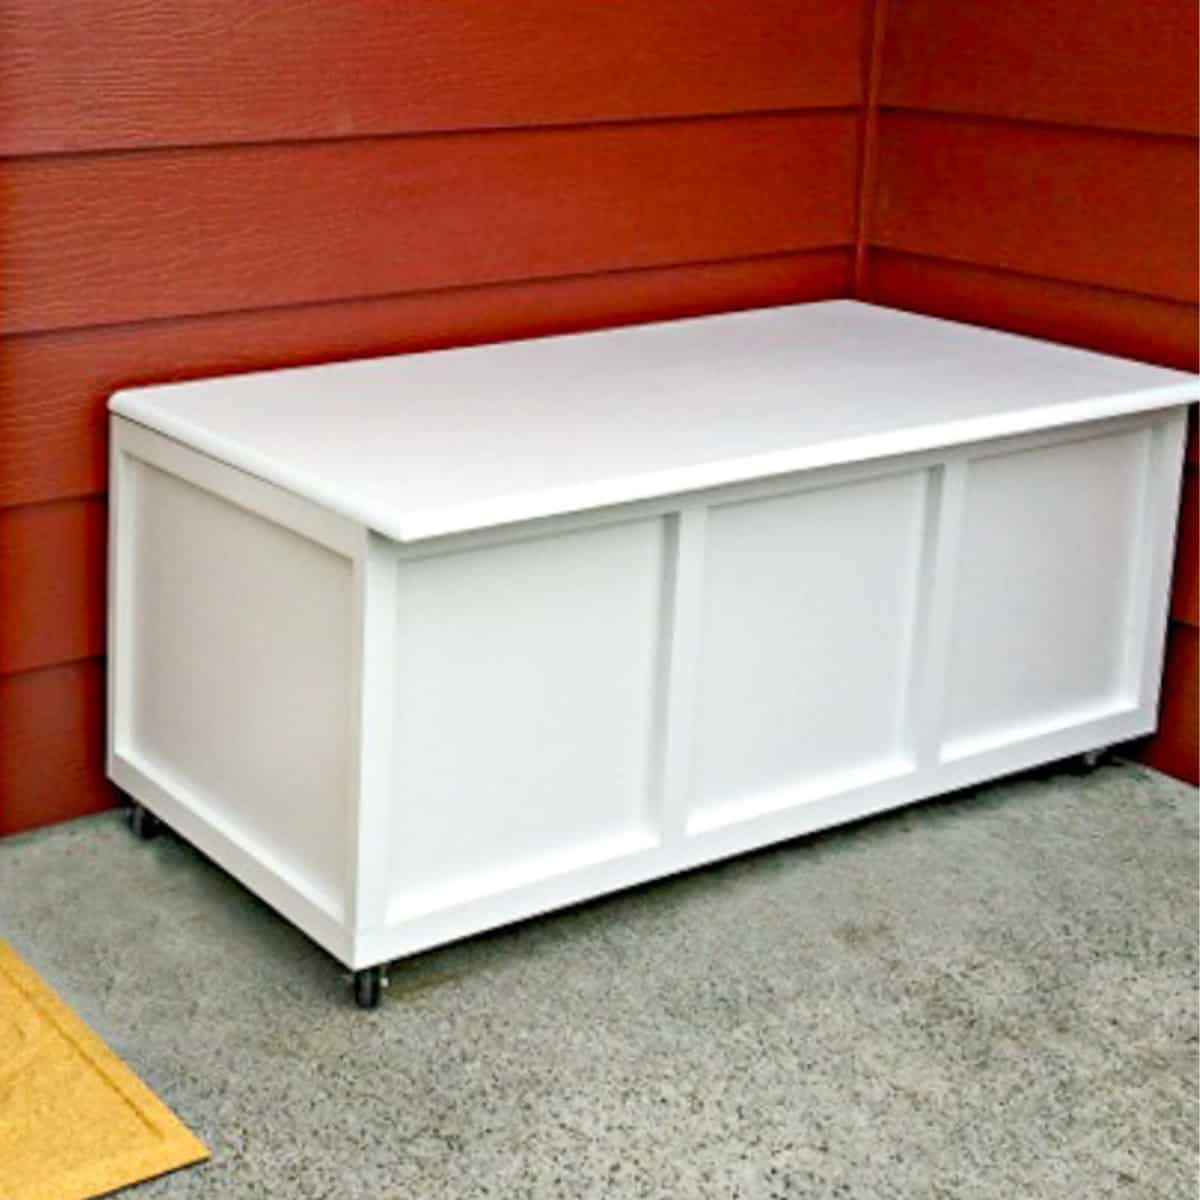 DIY Outdoor Storage Box / Bench - Sand and Sisal